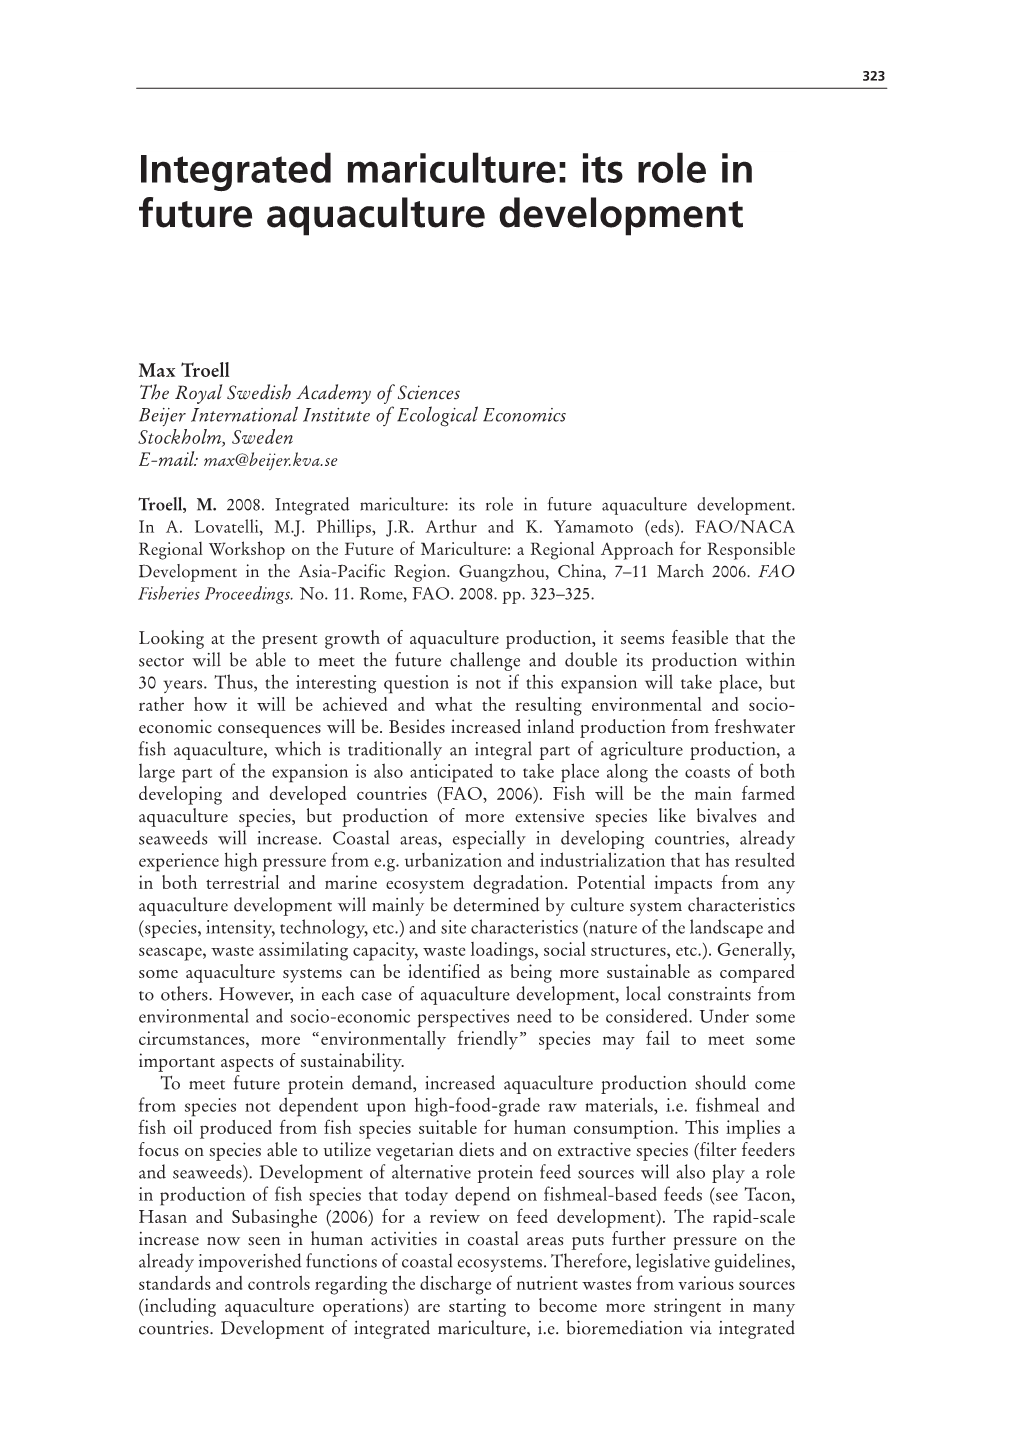 Integrated Mariculture: Its Role in Future Aquaculture Development